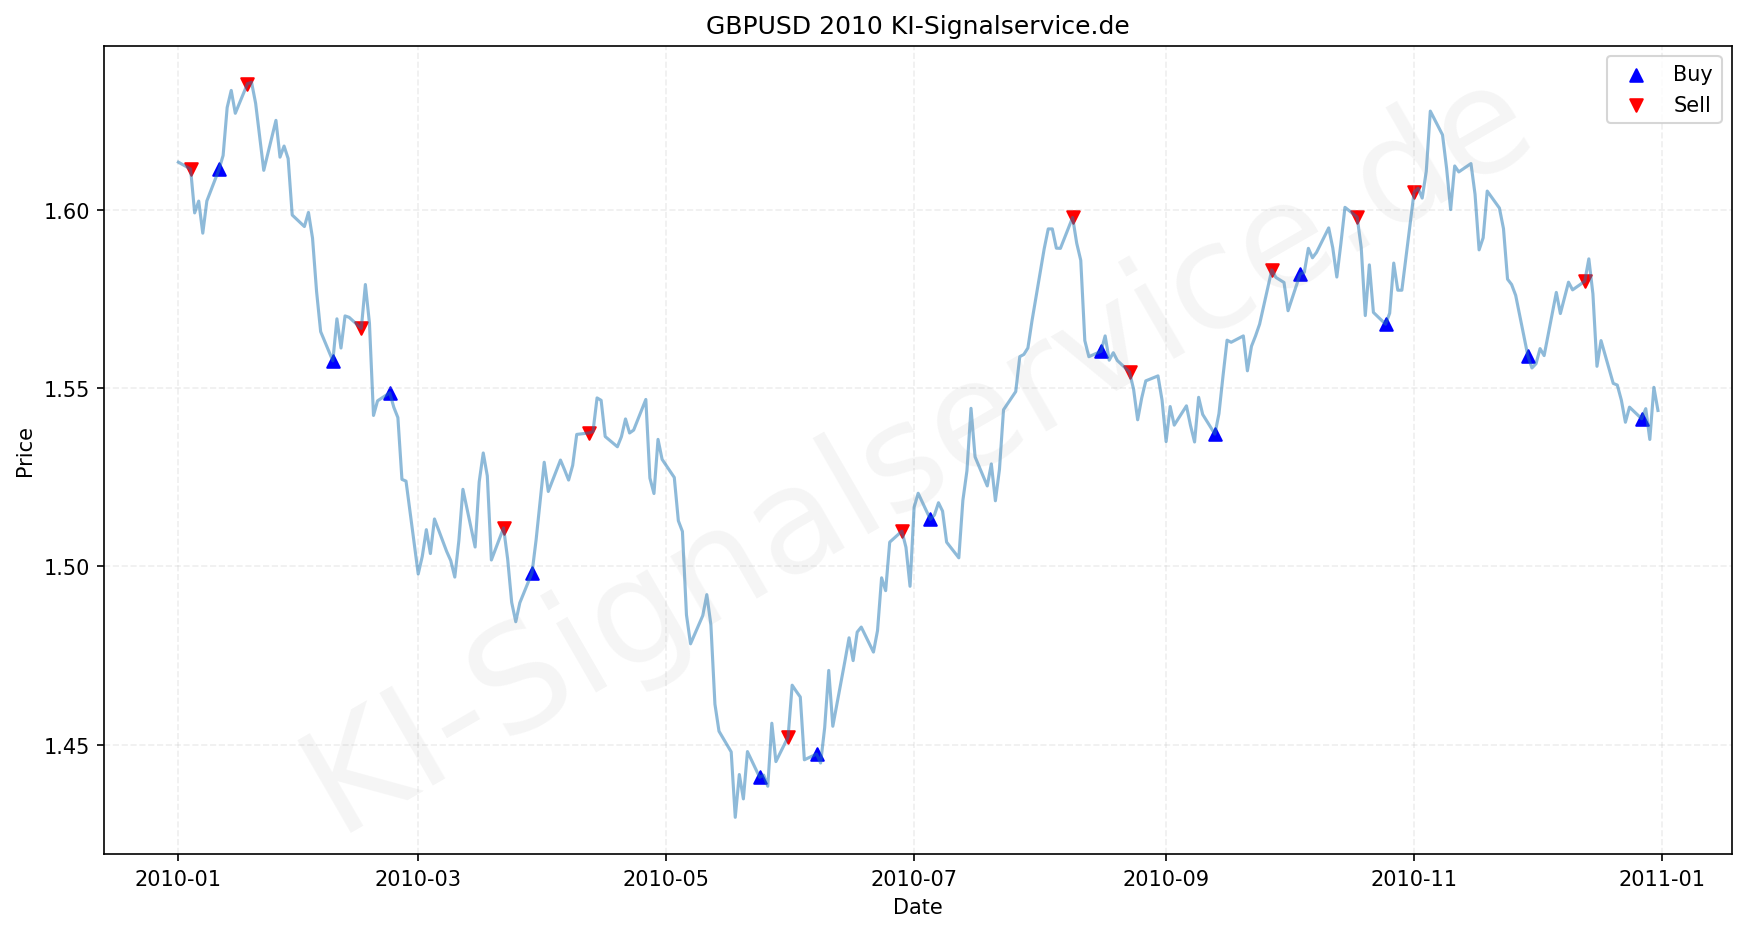 GBPUSD Chart - KI Tradingsignale 2010